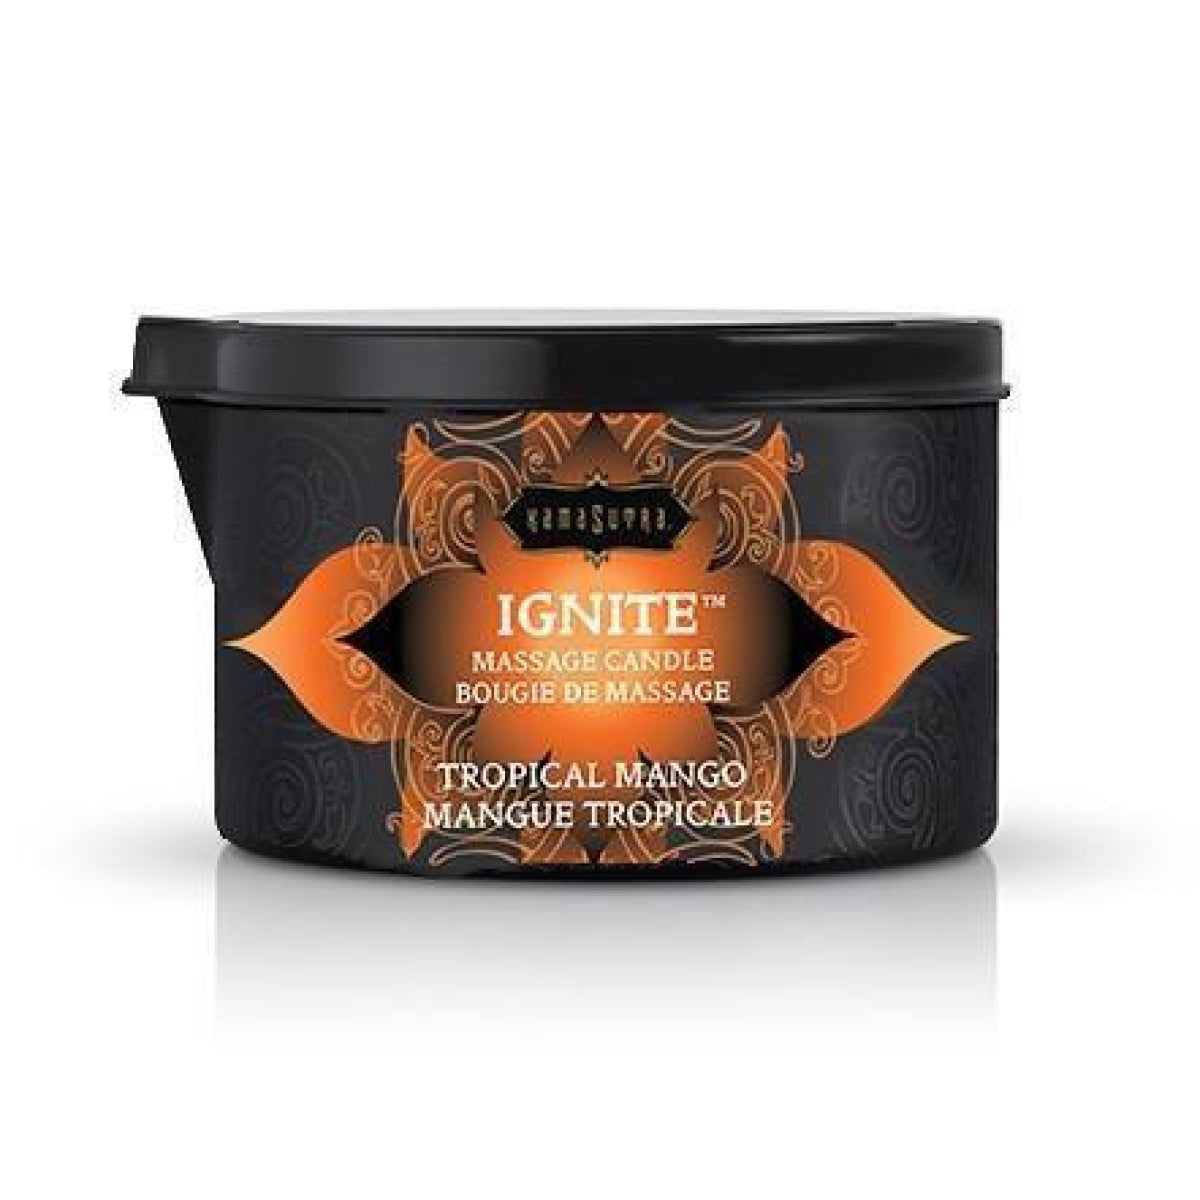 Ignite Massage Candle Tropical Mango Intimates Adult Boutique